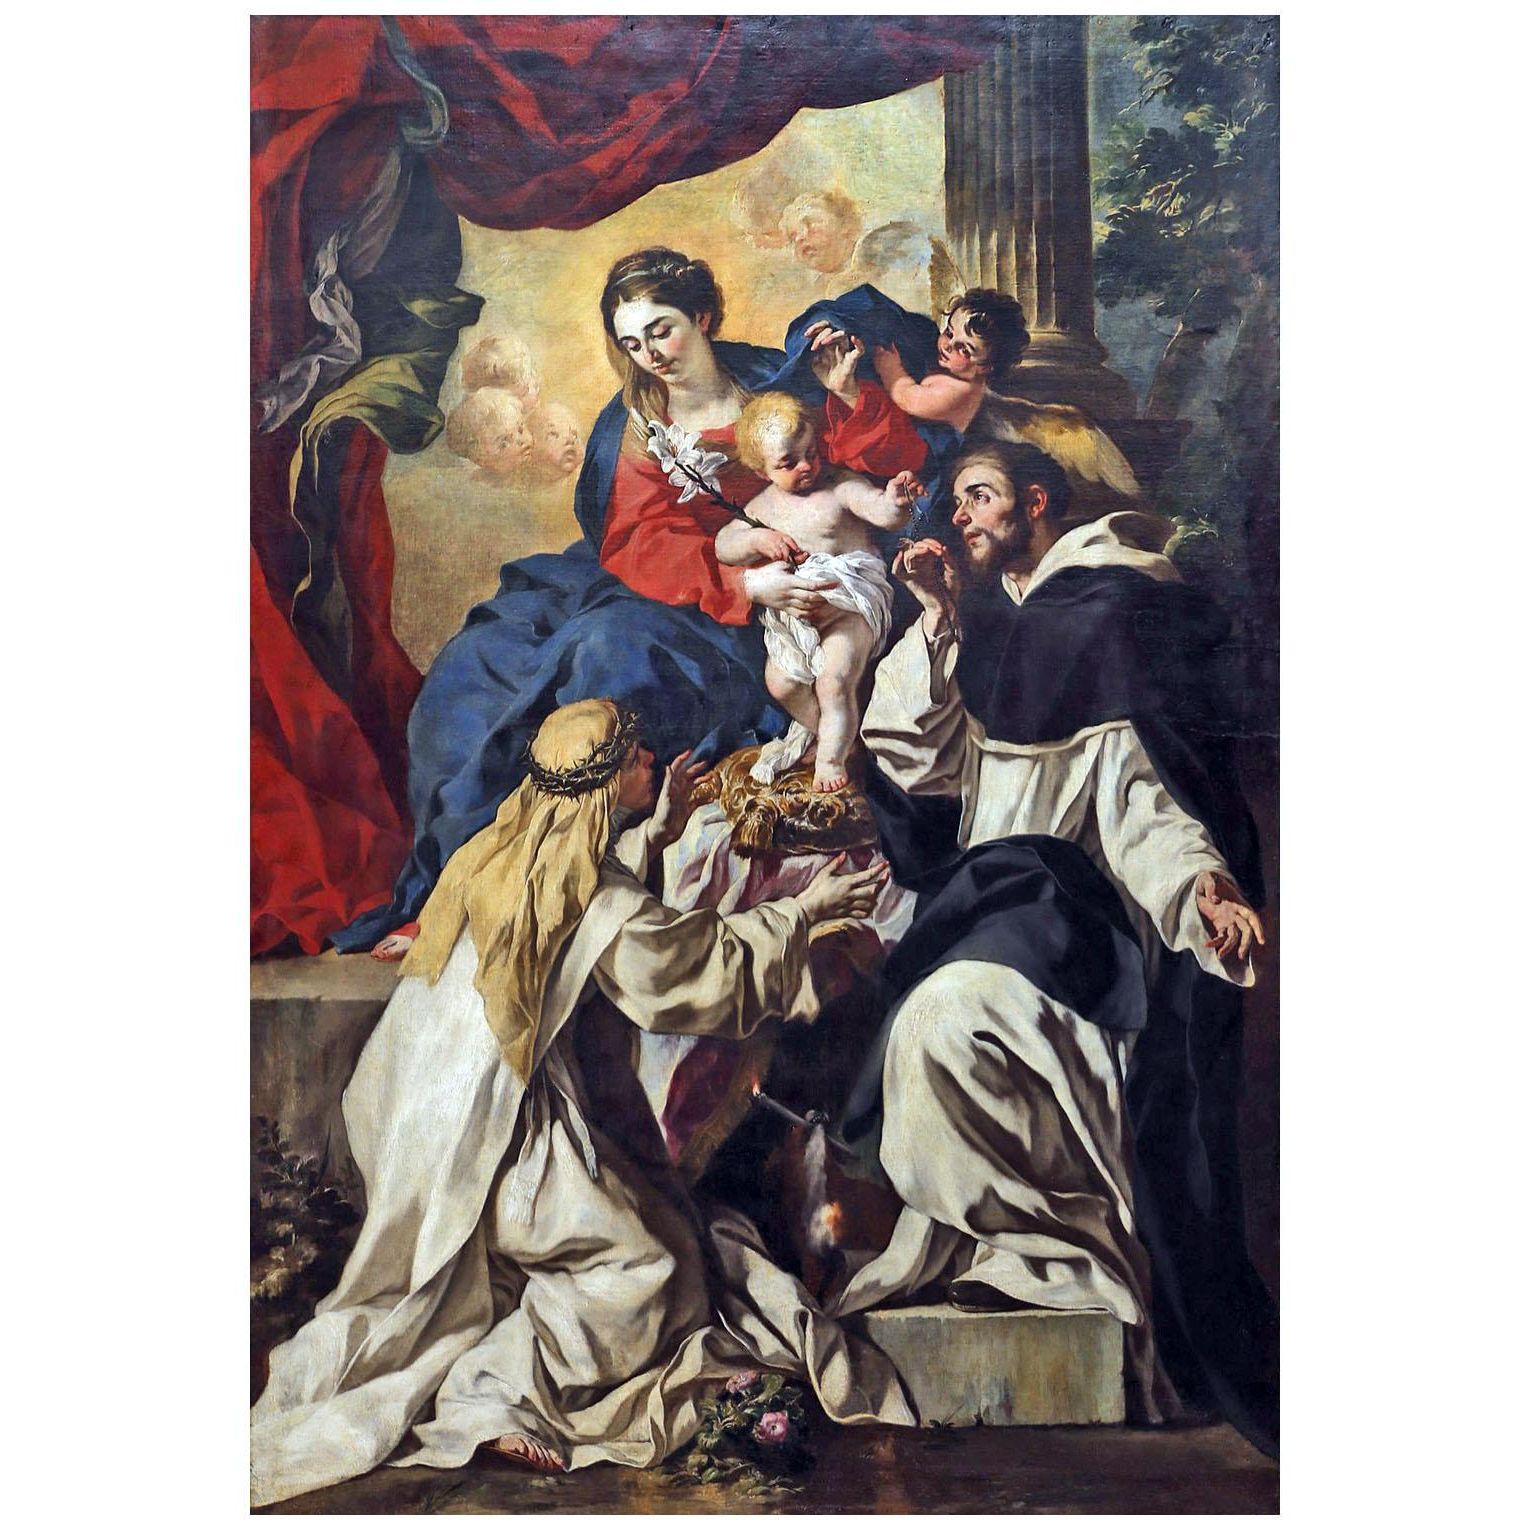 Francesco Solimena. Madonna in trono. 1681. Gemaldegalerie Berlin